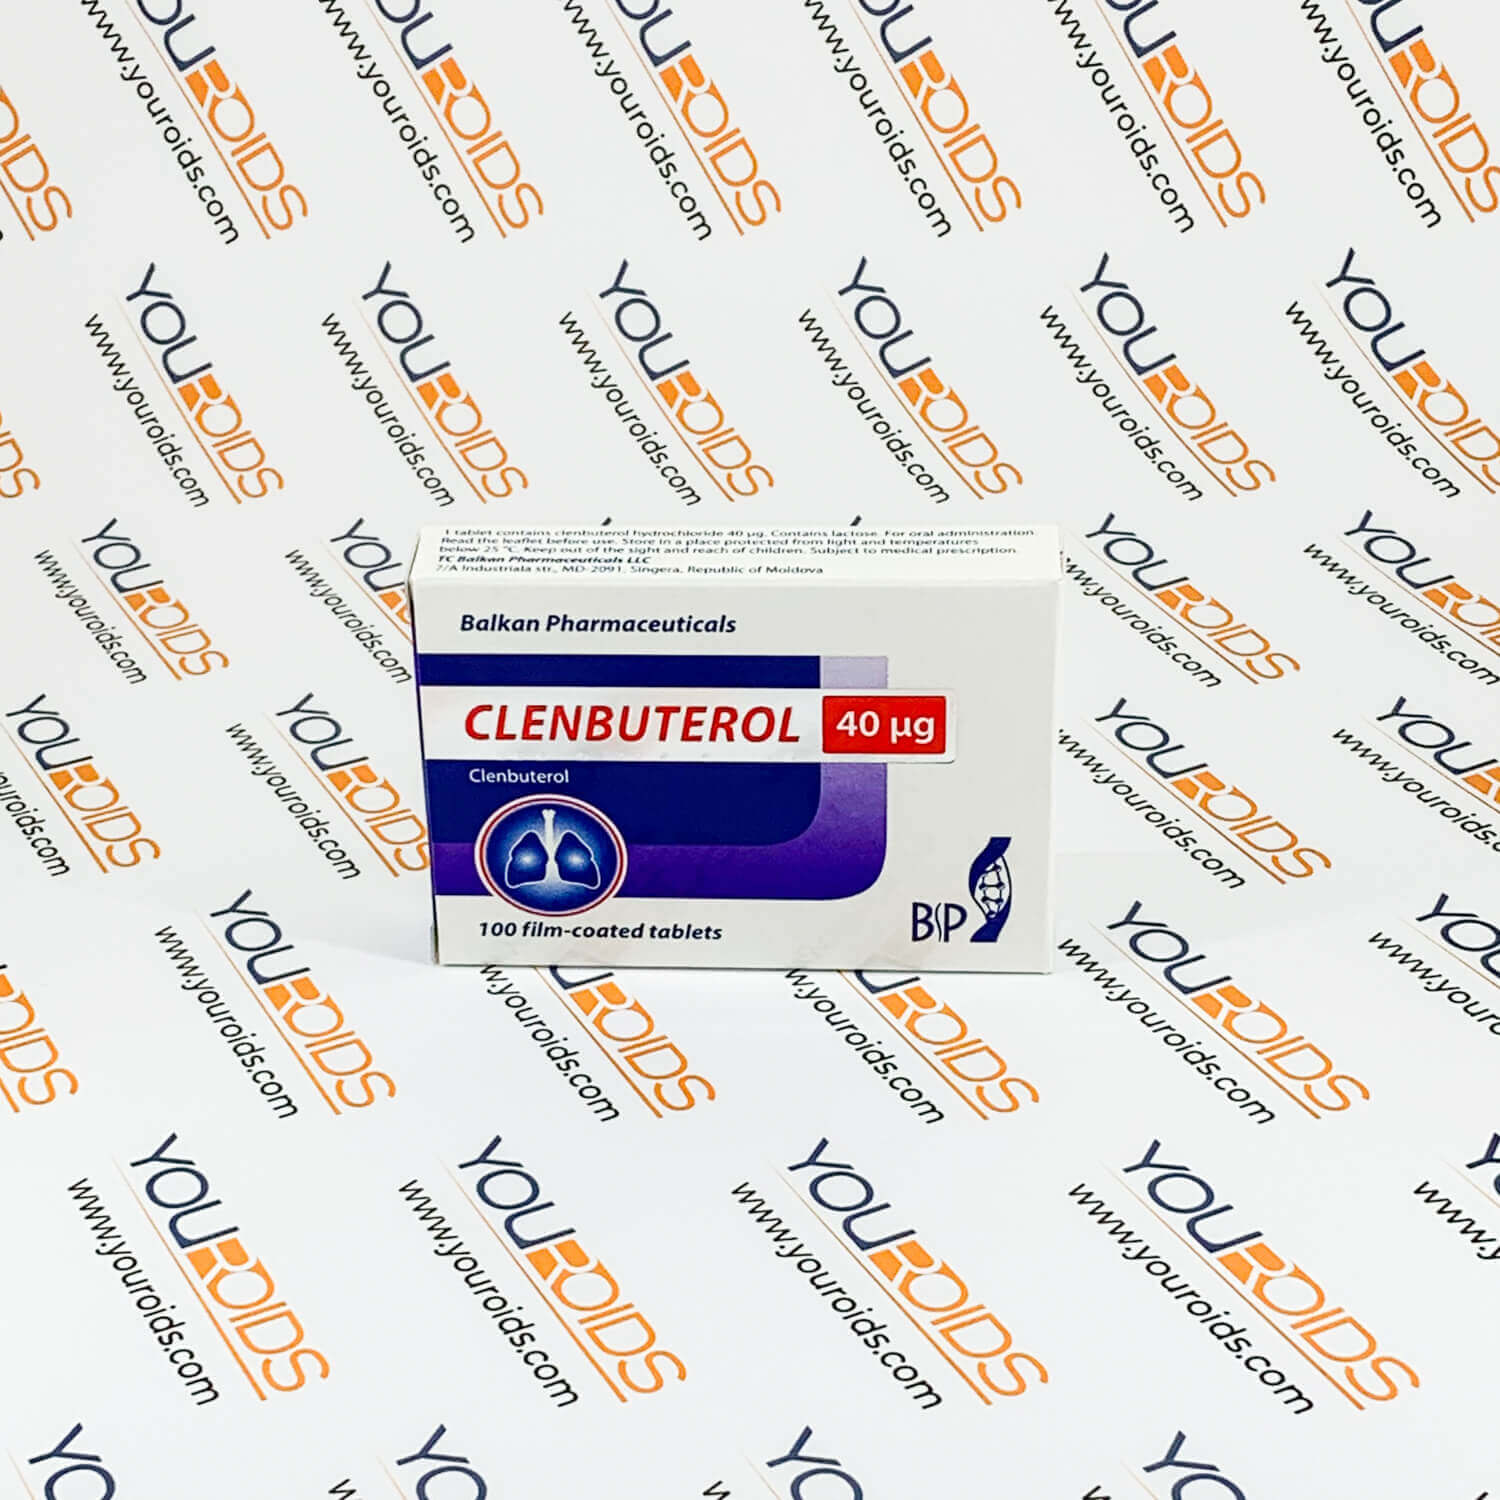 Clenbuterol 40mcg pills Balkan Pharmaceuticals